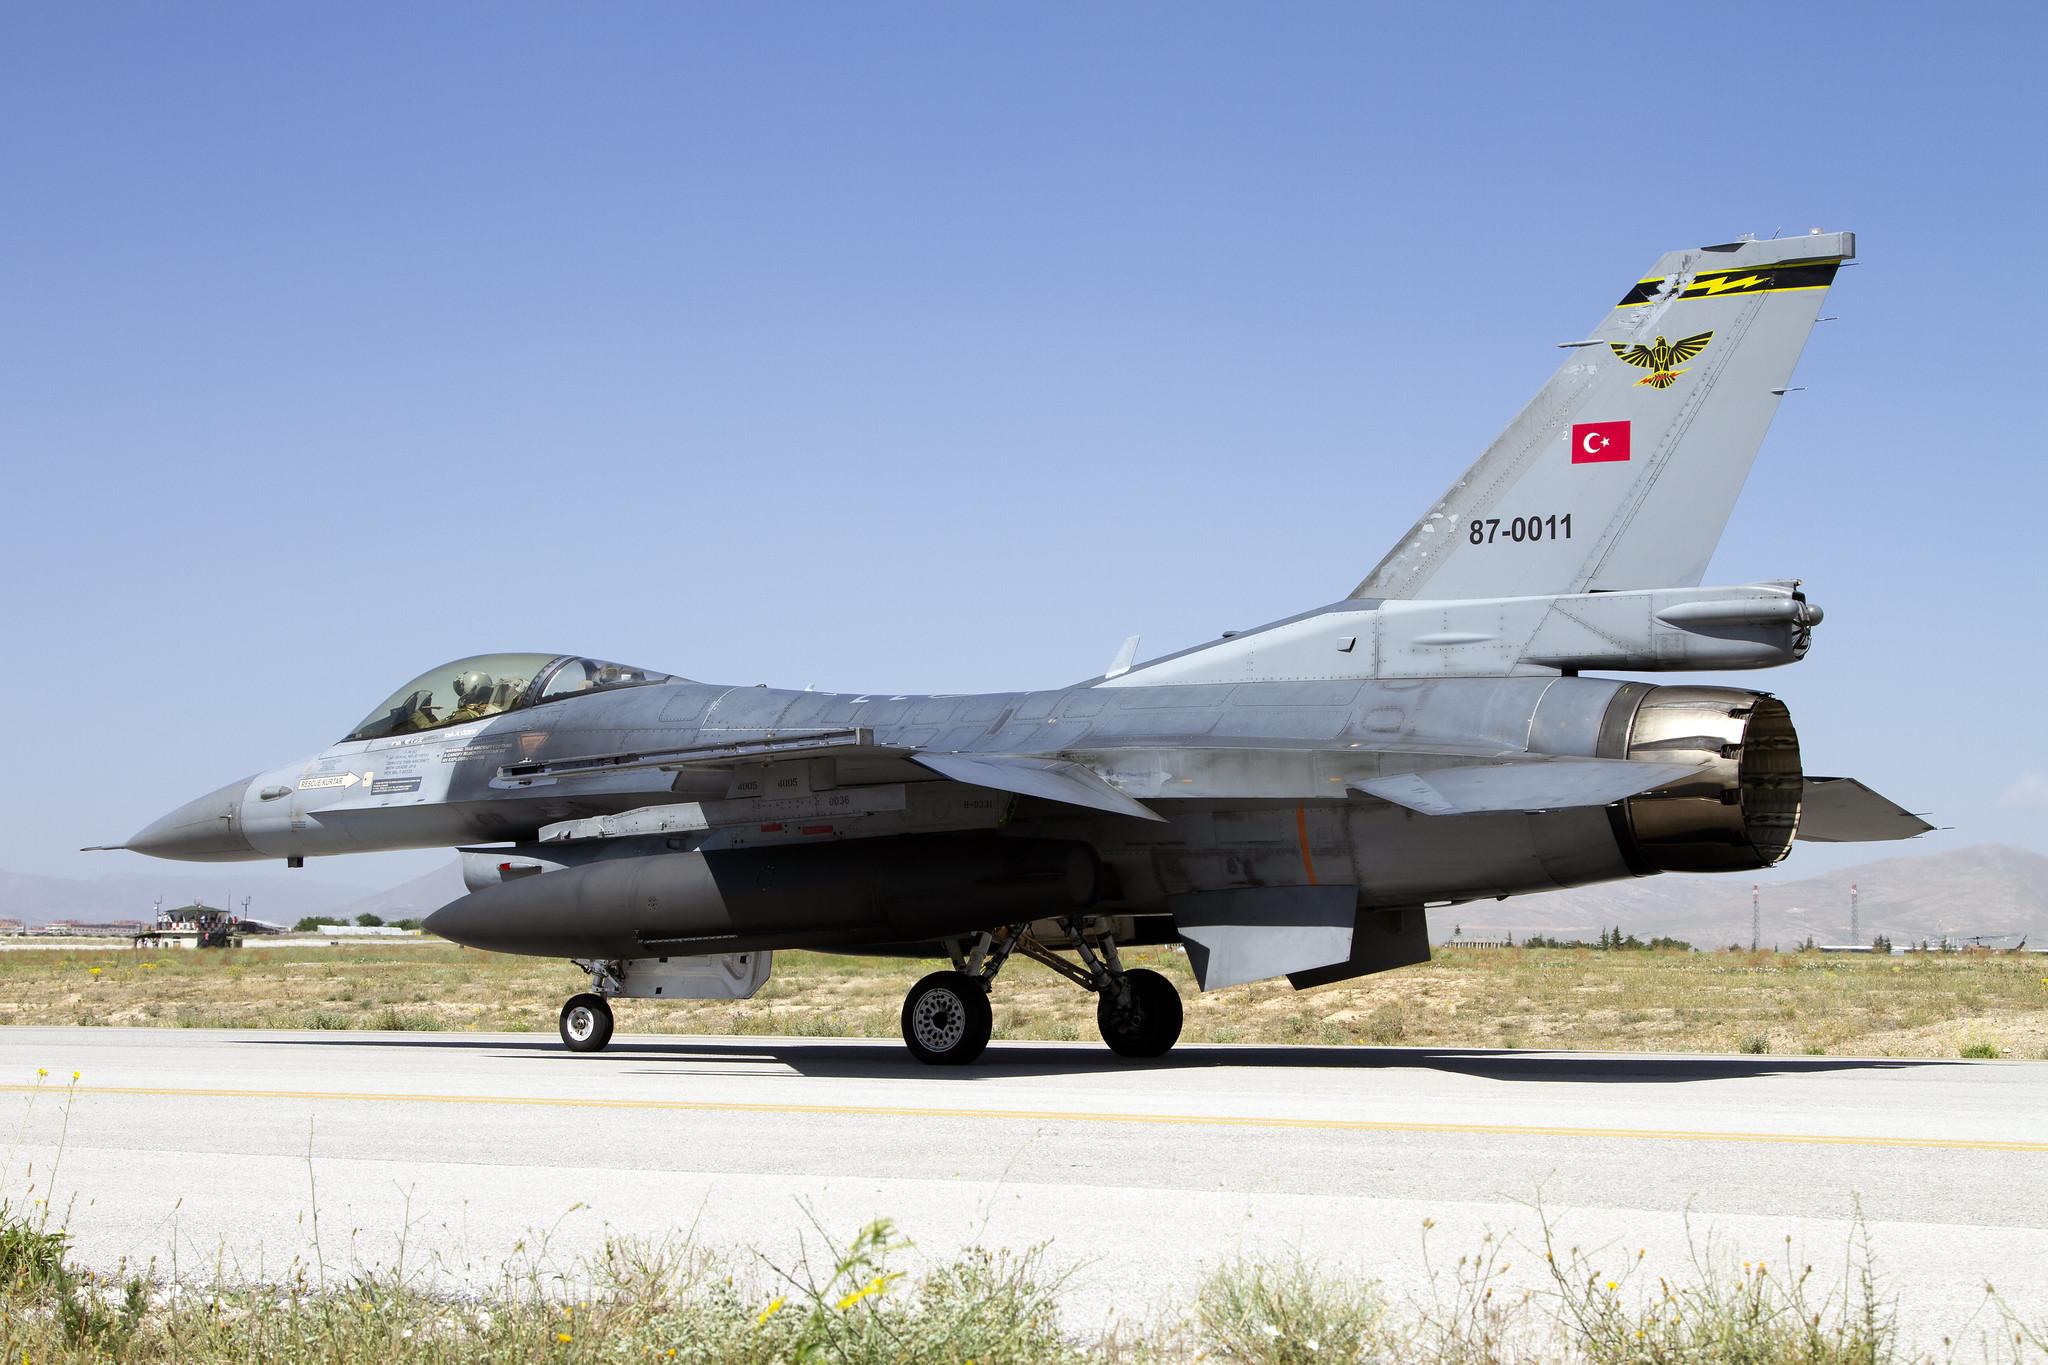 Turkish Air Force Block 30 Lockheed Martin F-16